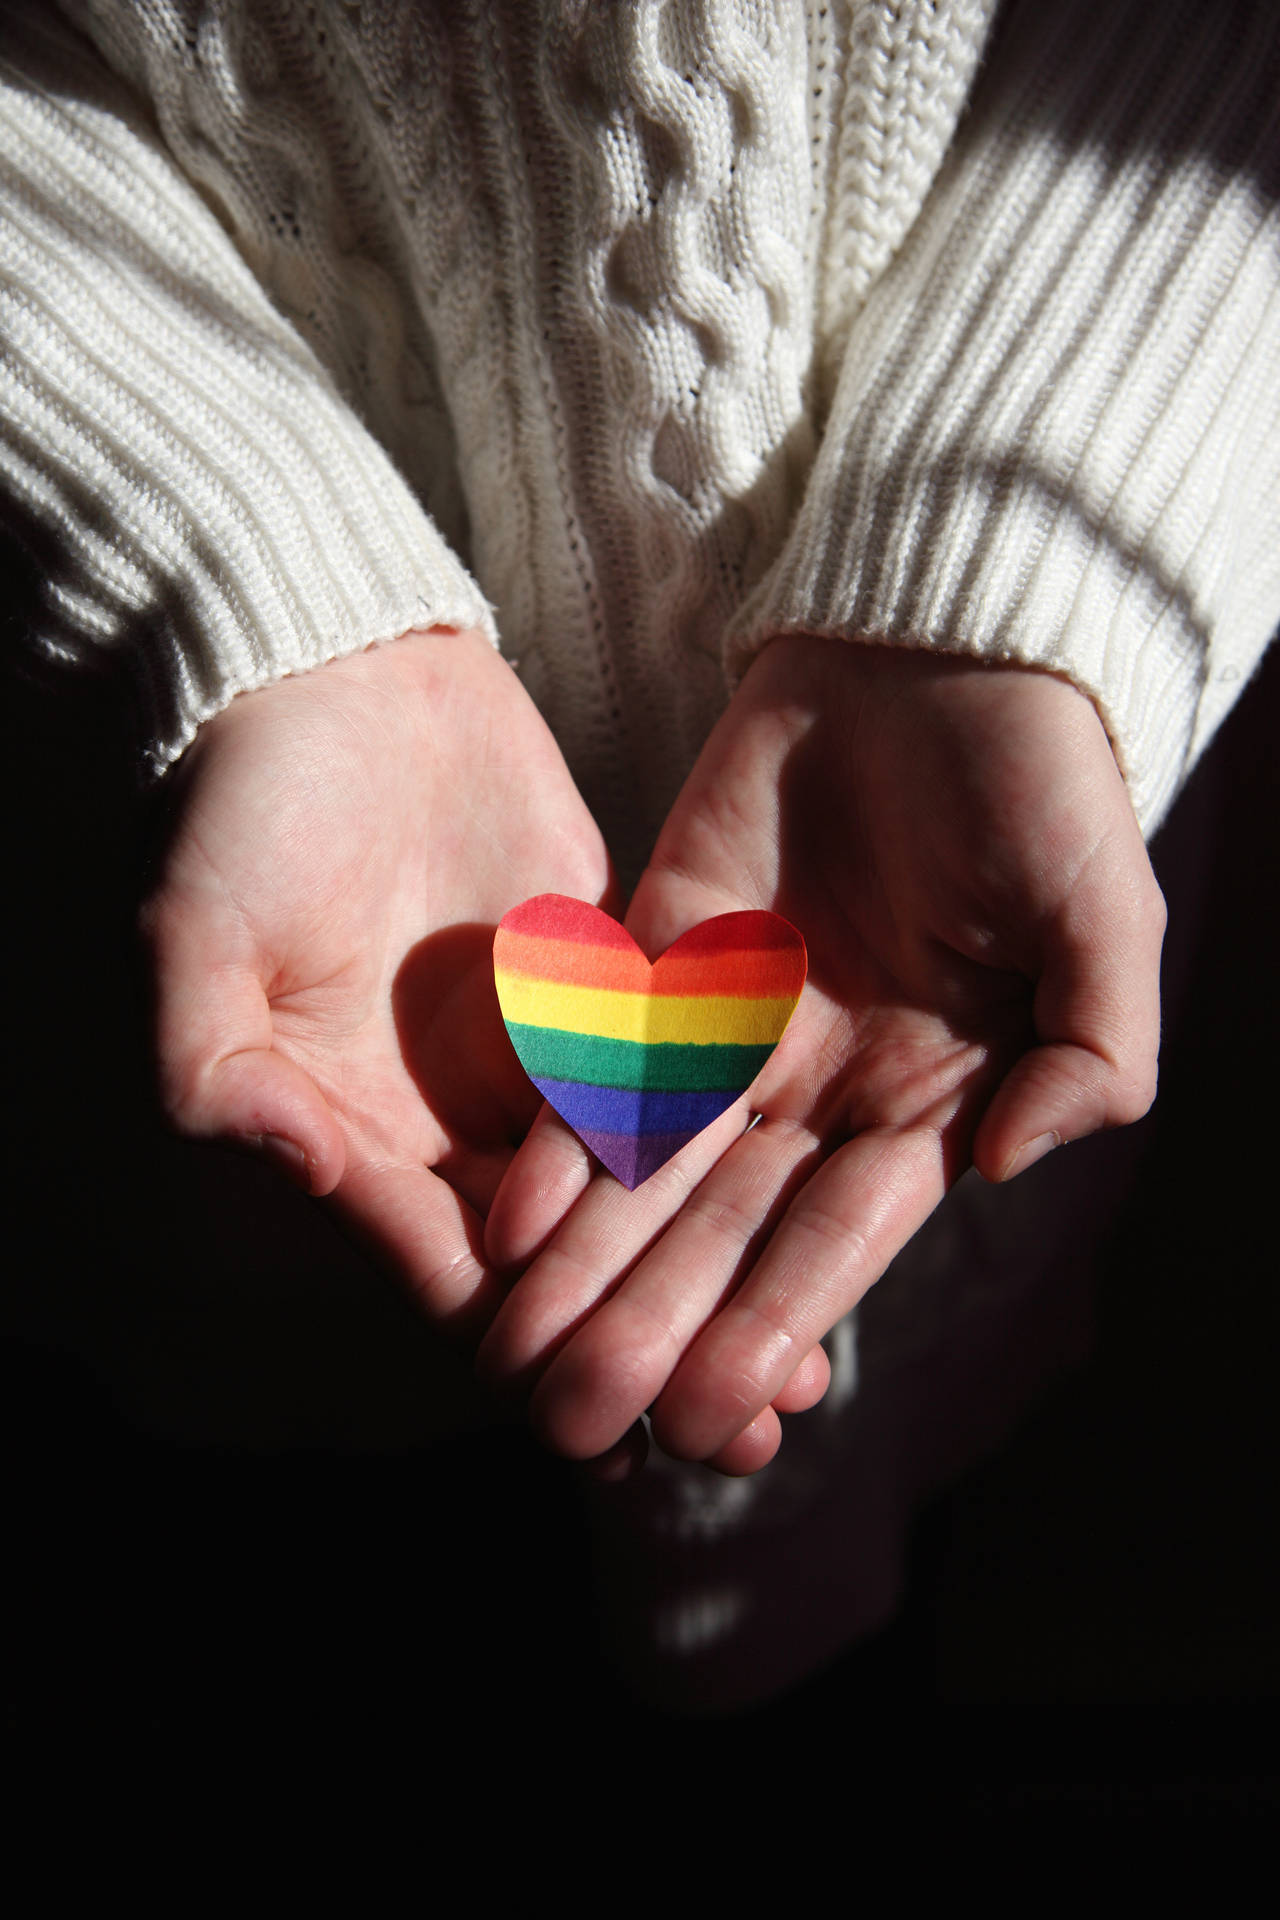 Vibrant Lesbian Flag Symbolizing Pride And Love